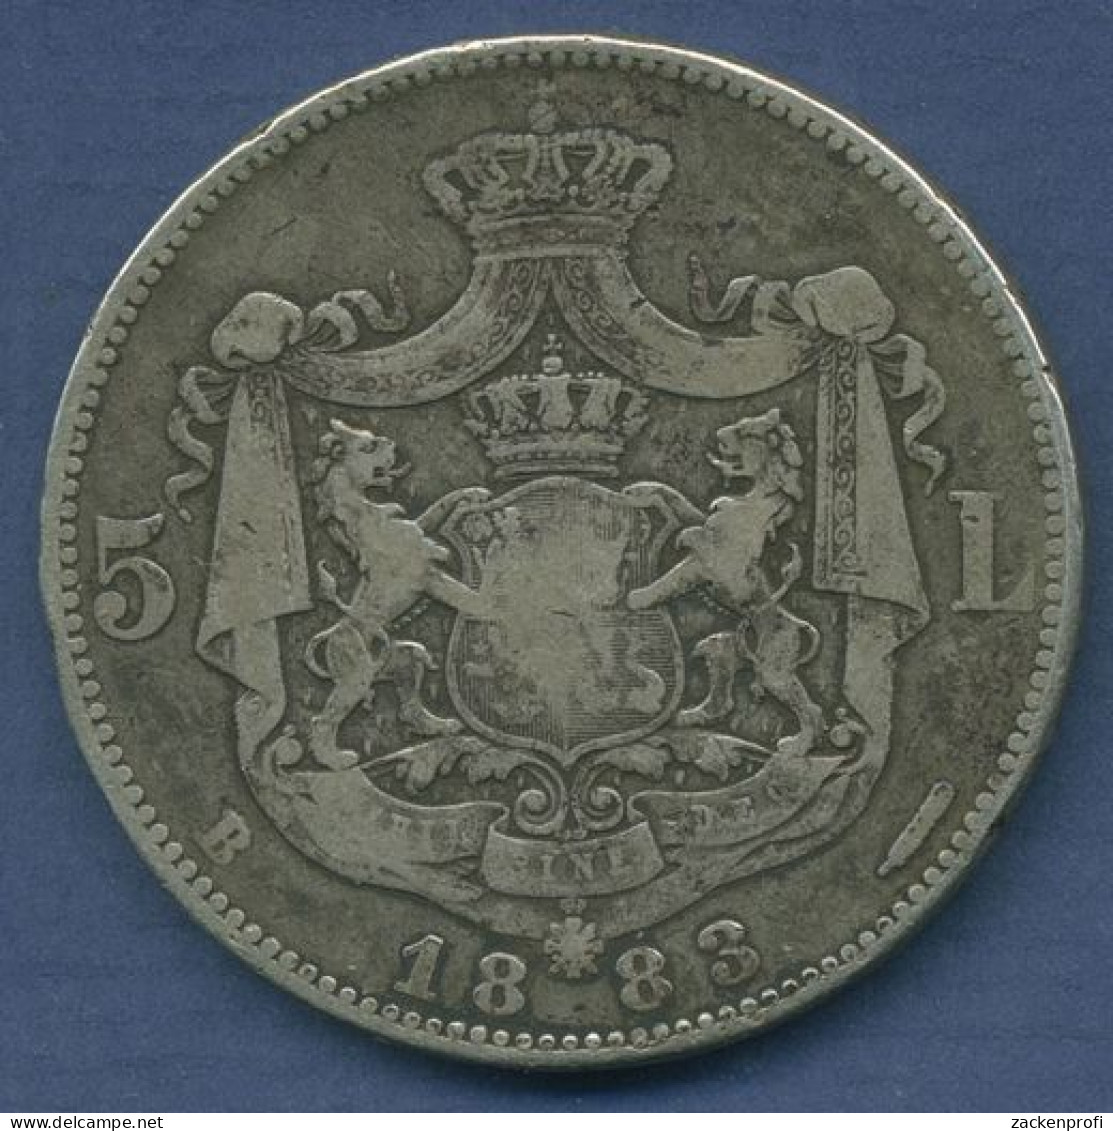 Rumänien 5 Lei 1883 B, Carol I., KM 17.1 Schön - Sehr Schön (m3937) - Romania